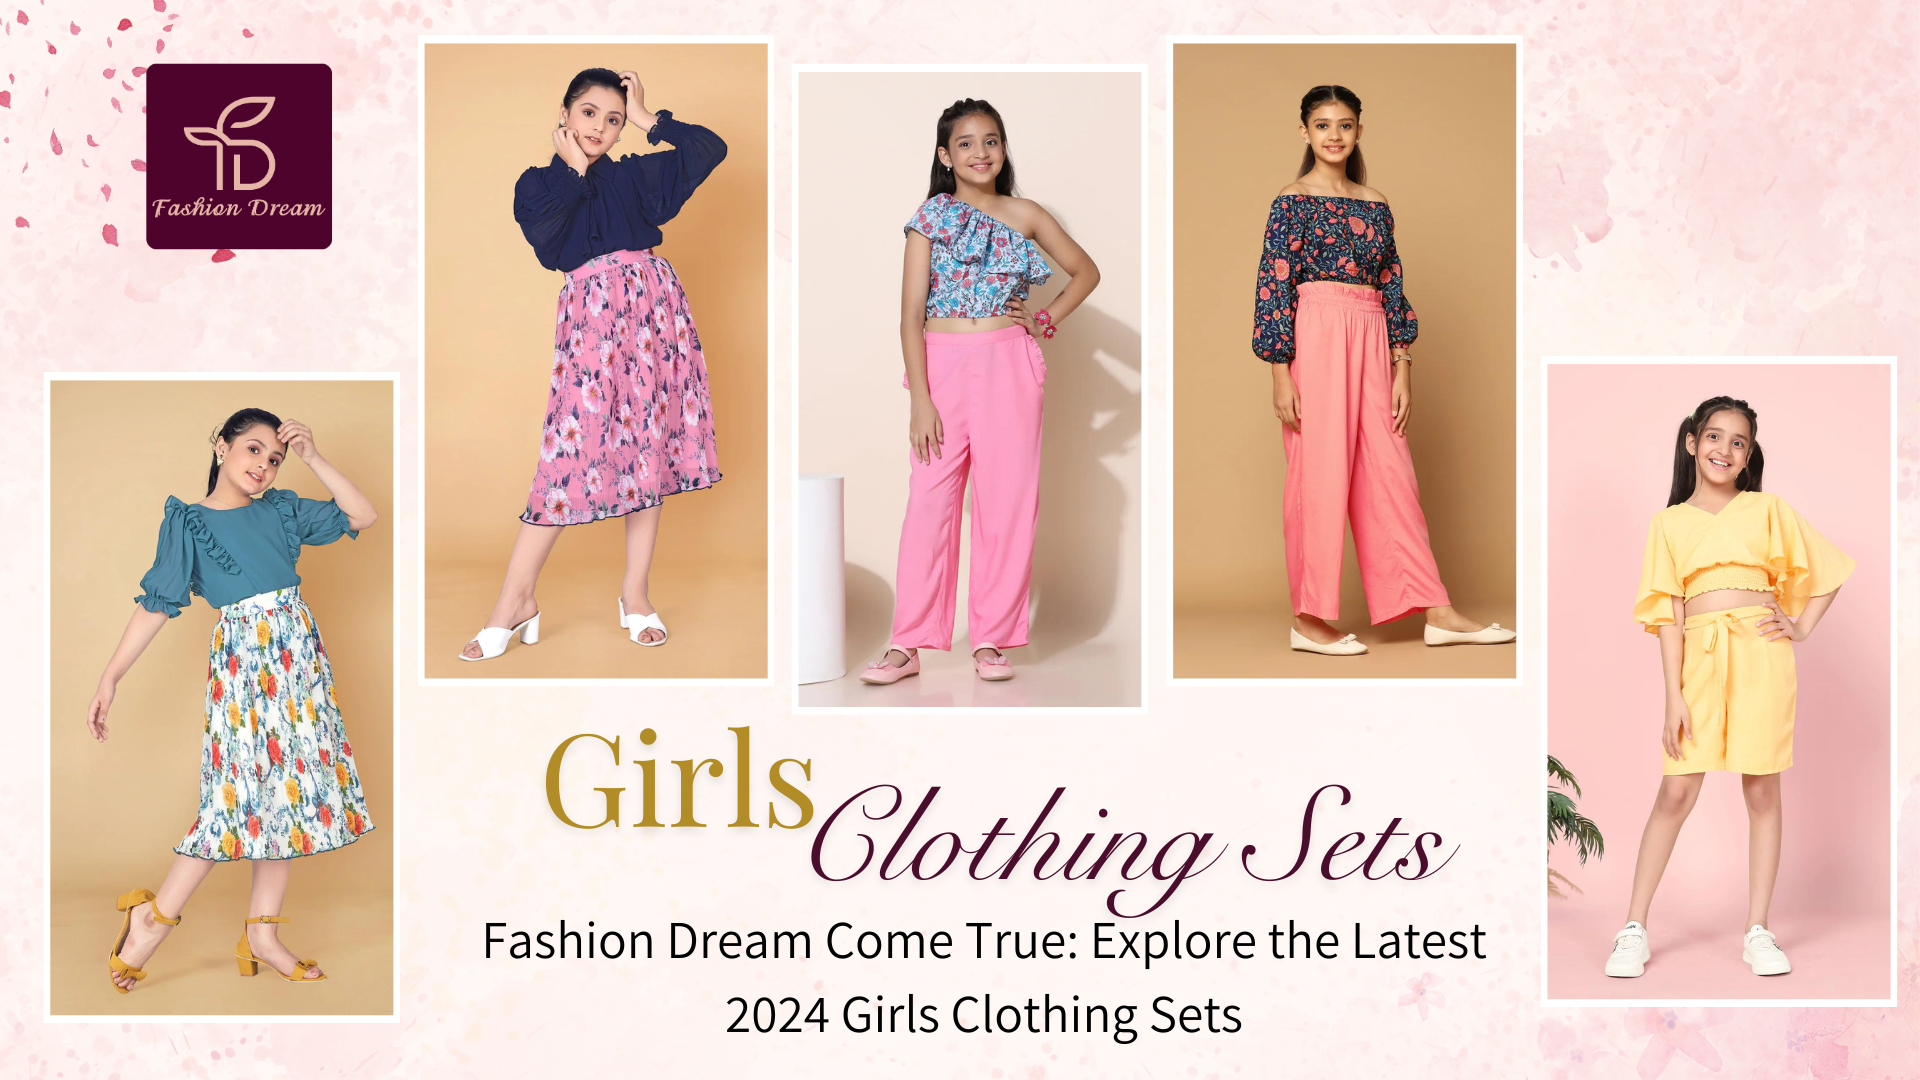 Fashion Dream Come True: Explore the Latest 2024 Girls Clothing Sets